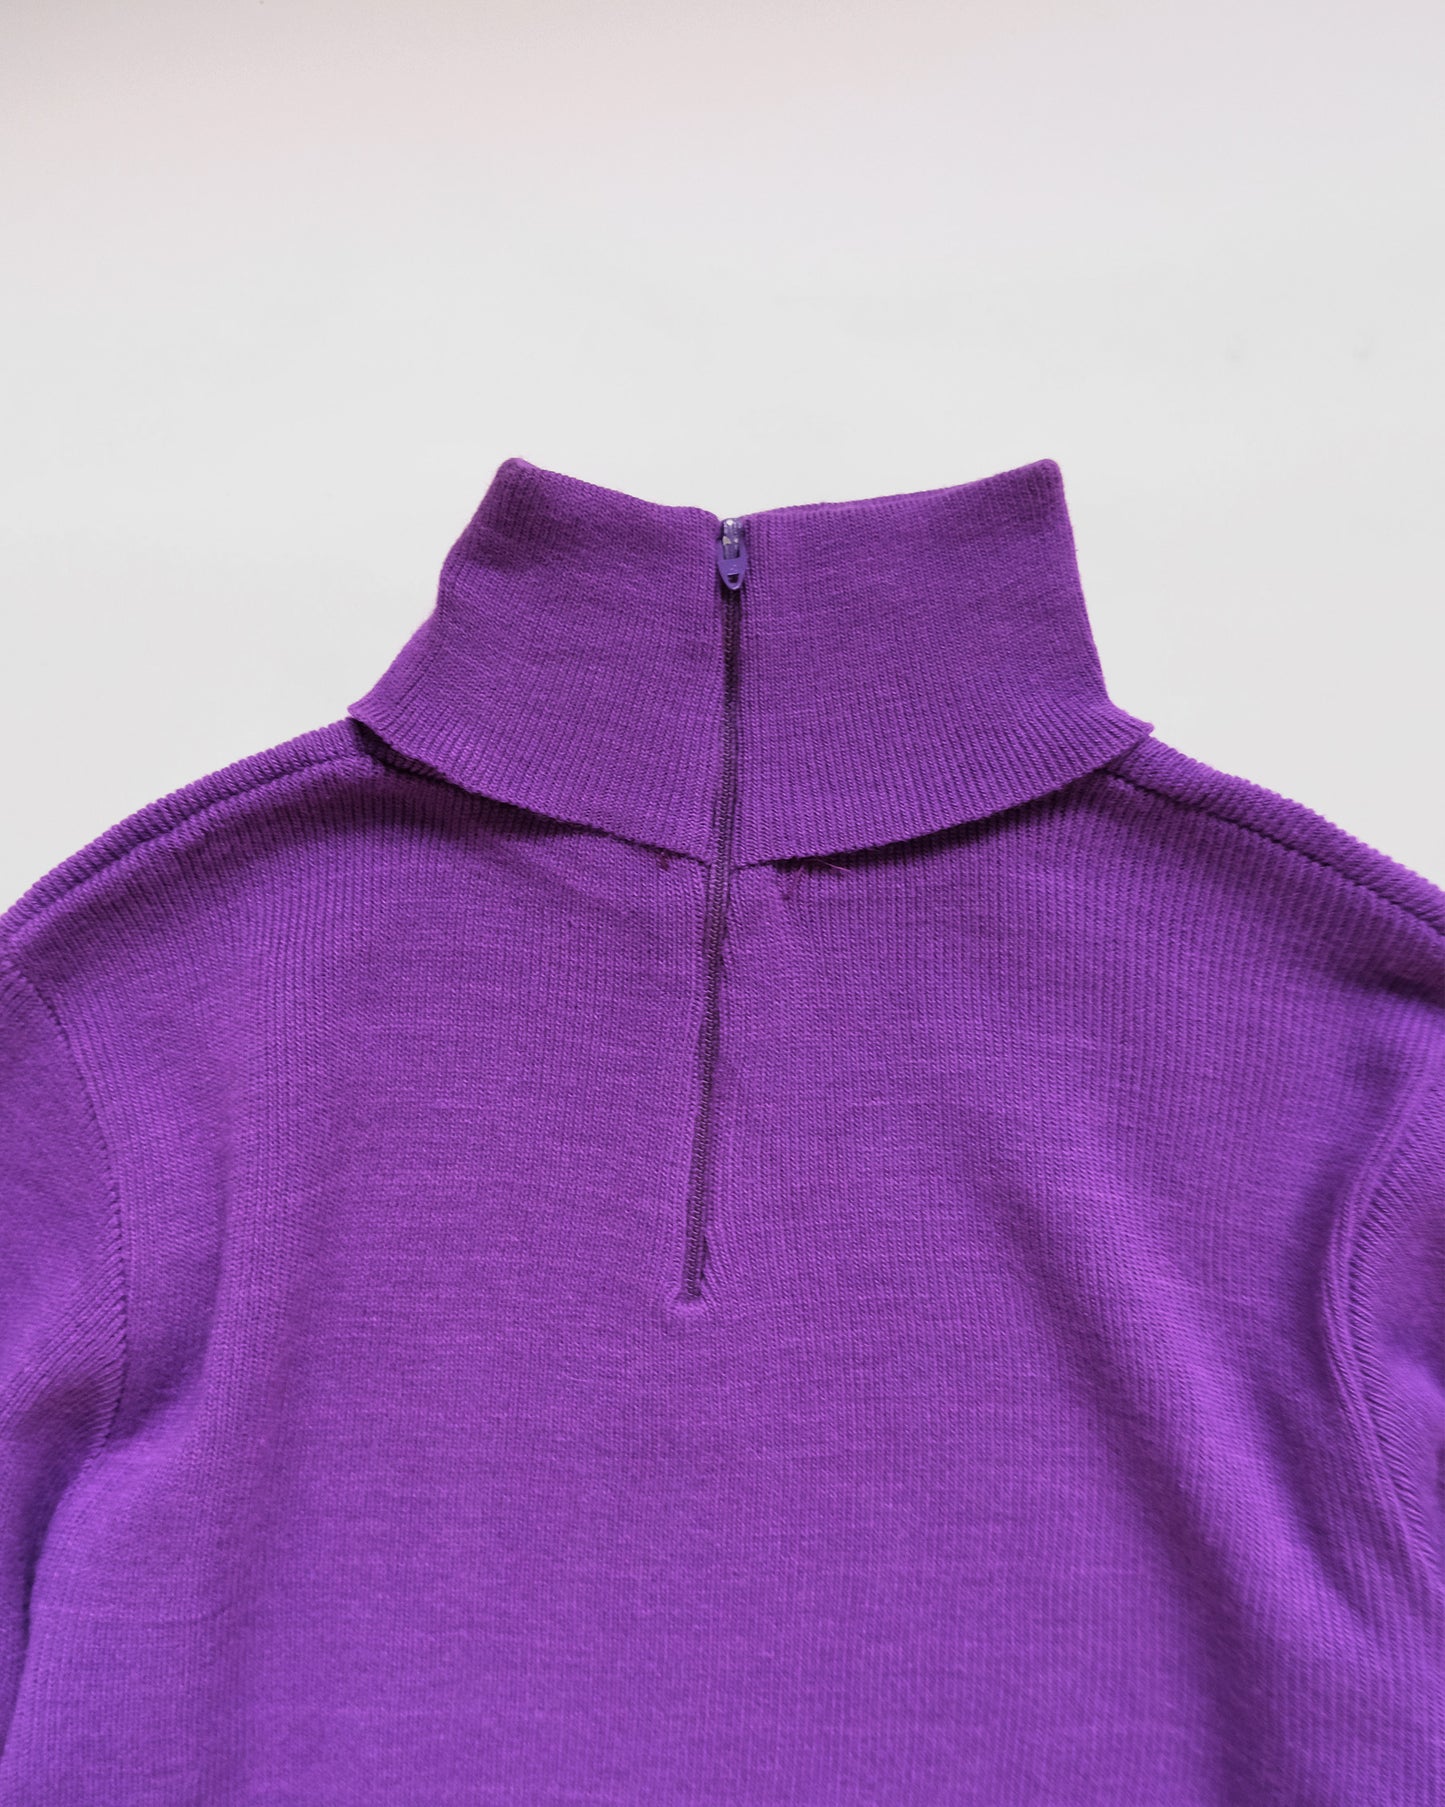 NOS Turtleneck Sweater with Back Zippier - Purple